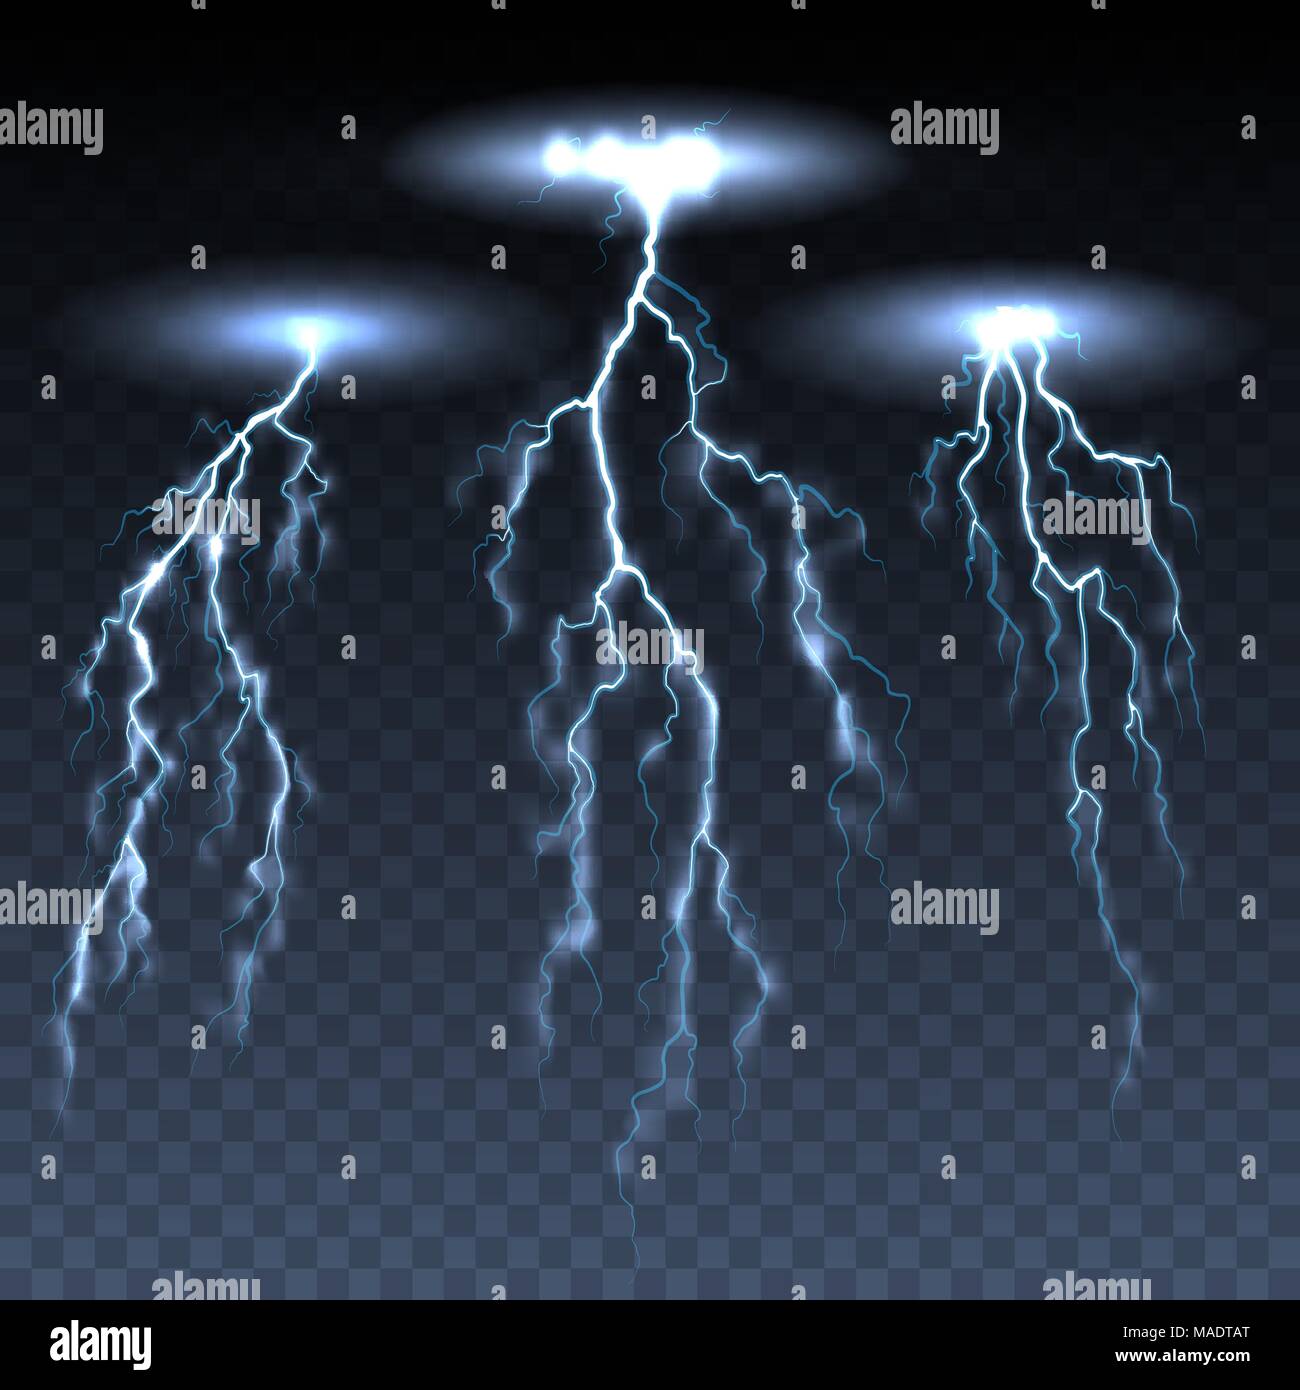 Thunderbolts. Vektor Sturm Electric Lightning Thunder Schrauben auf dunklen transparenten Hintergrund isoliert Stock Vektor